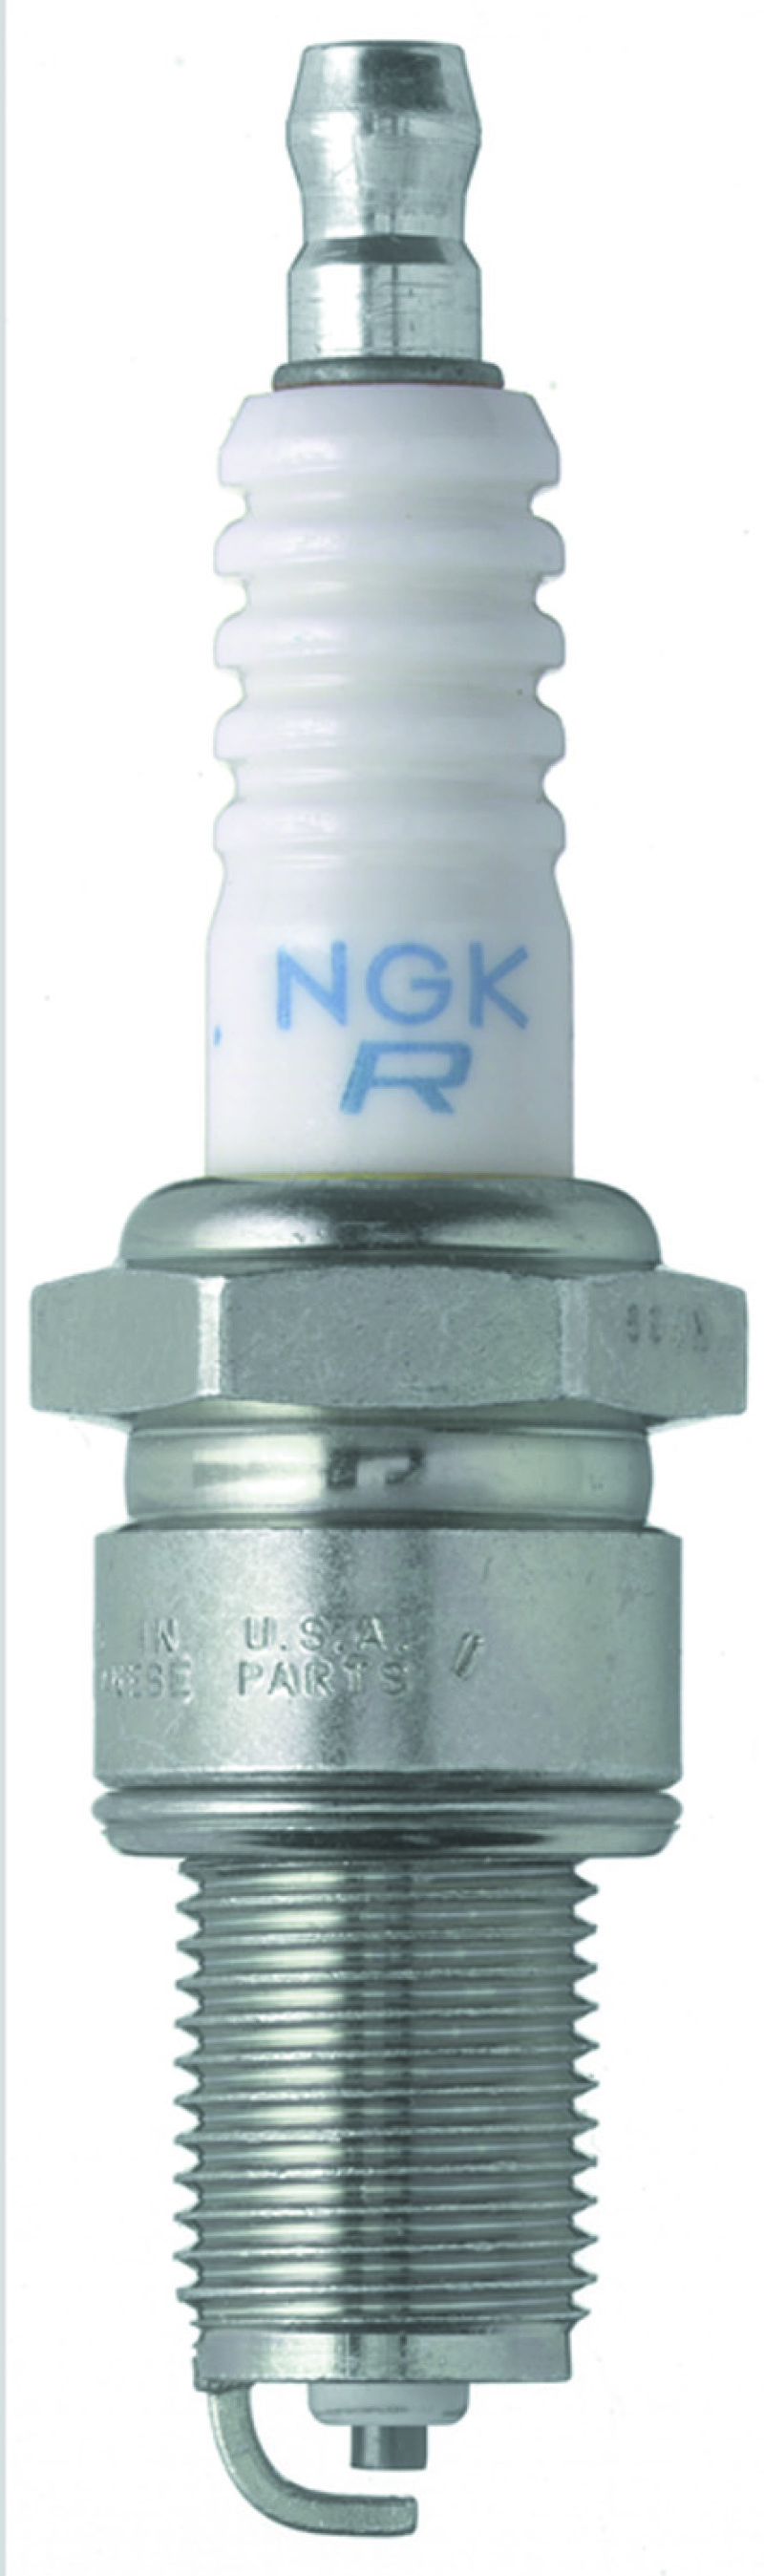 NGK Copper Nickel Alloy Spark Plug Box of 4 (BPR8ES) - 3923